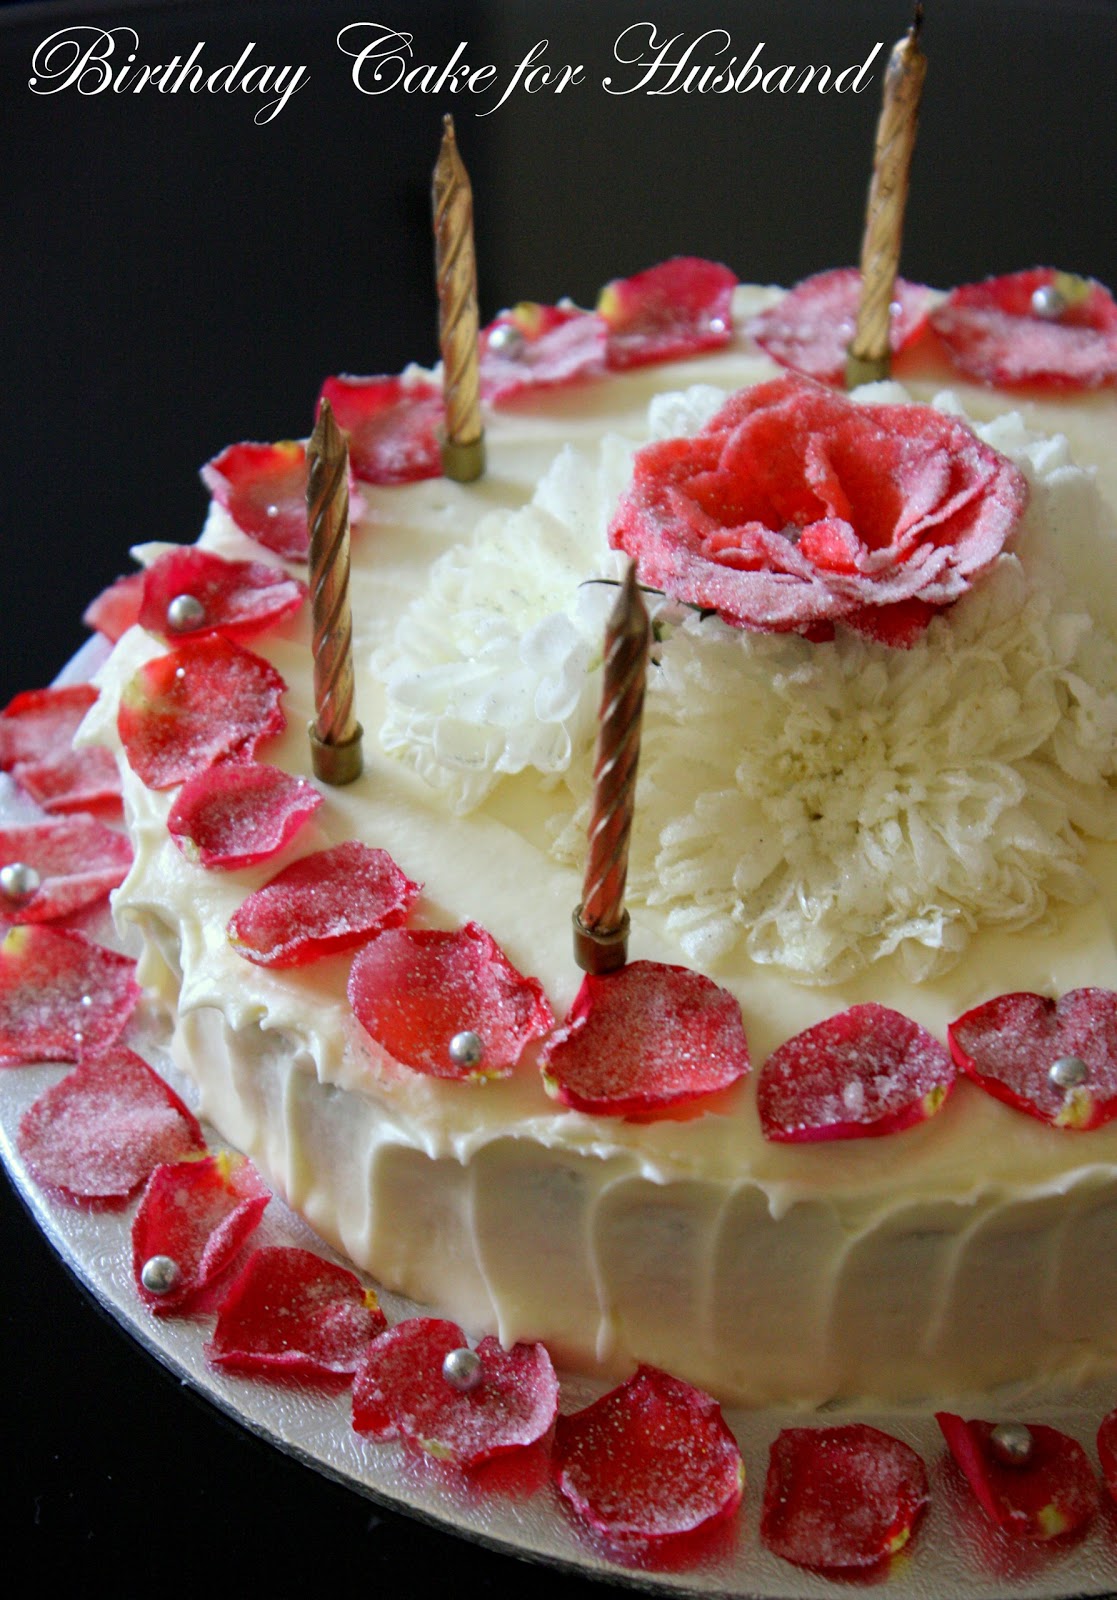 Happy Birthday Cake for Husband - Wishes & Love